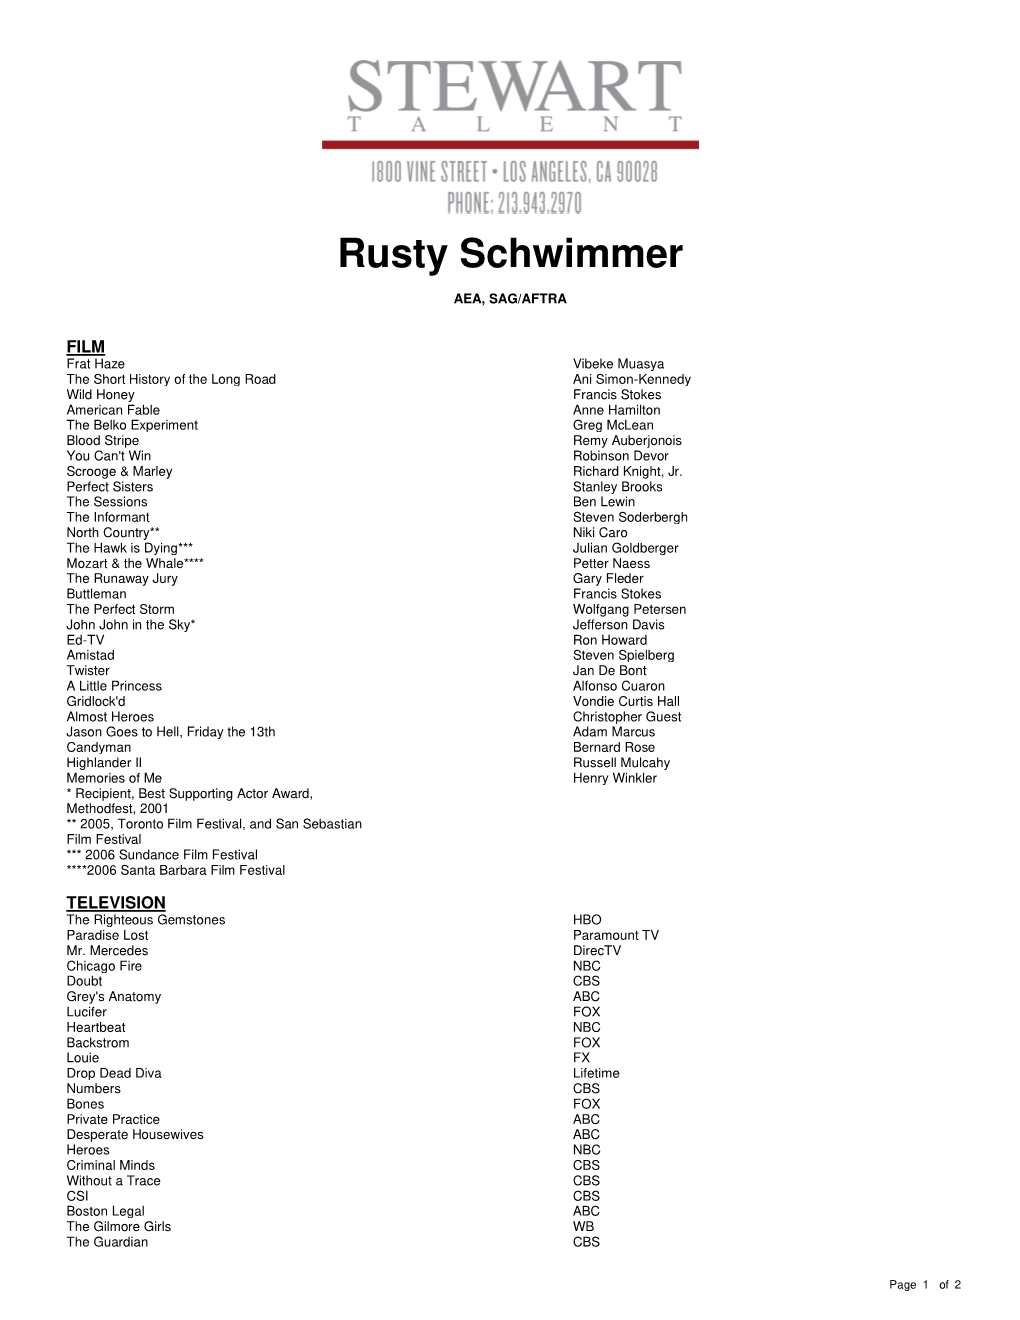 Rusty Schwimmer